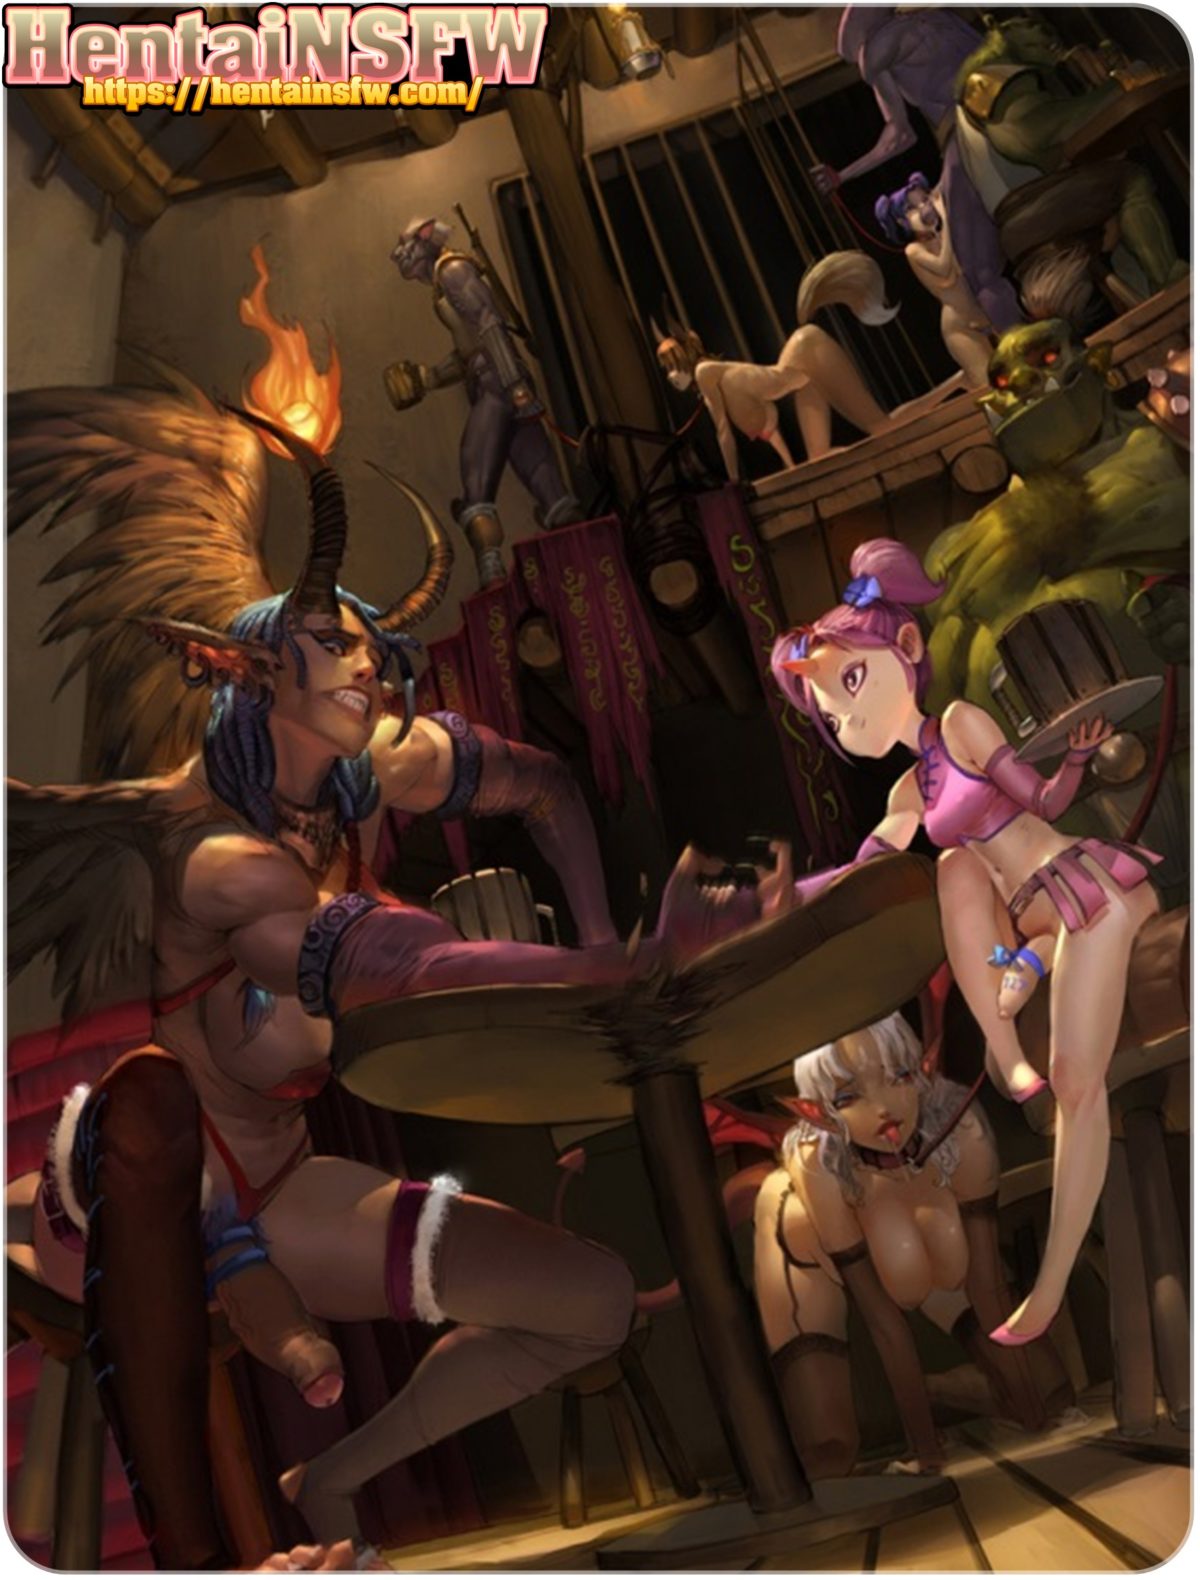 full color uncensored futa oppai hentai fantasy art of futanari babes in a sex game tavern